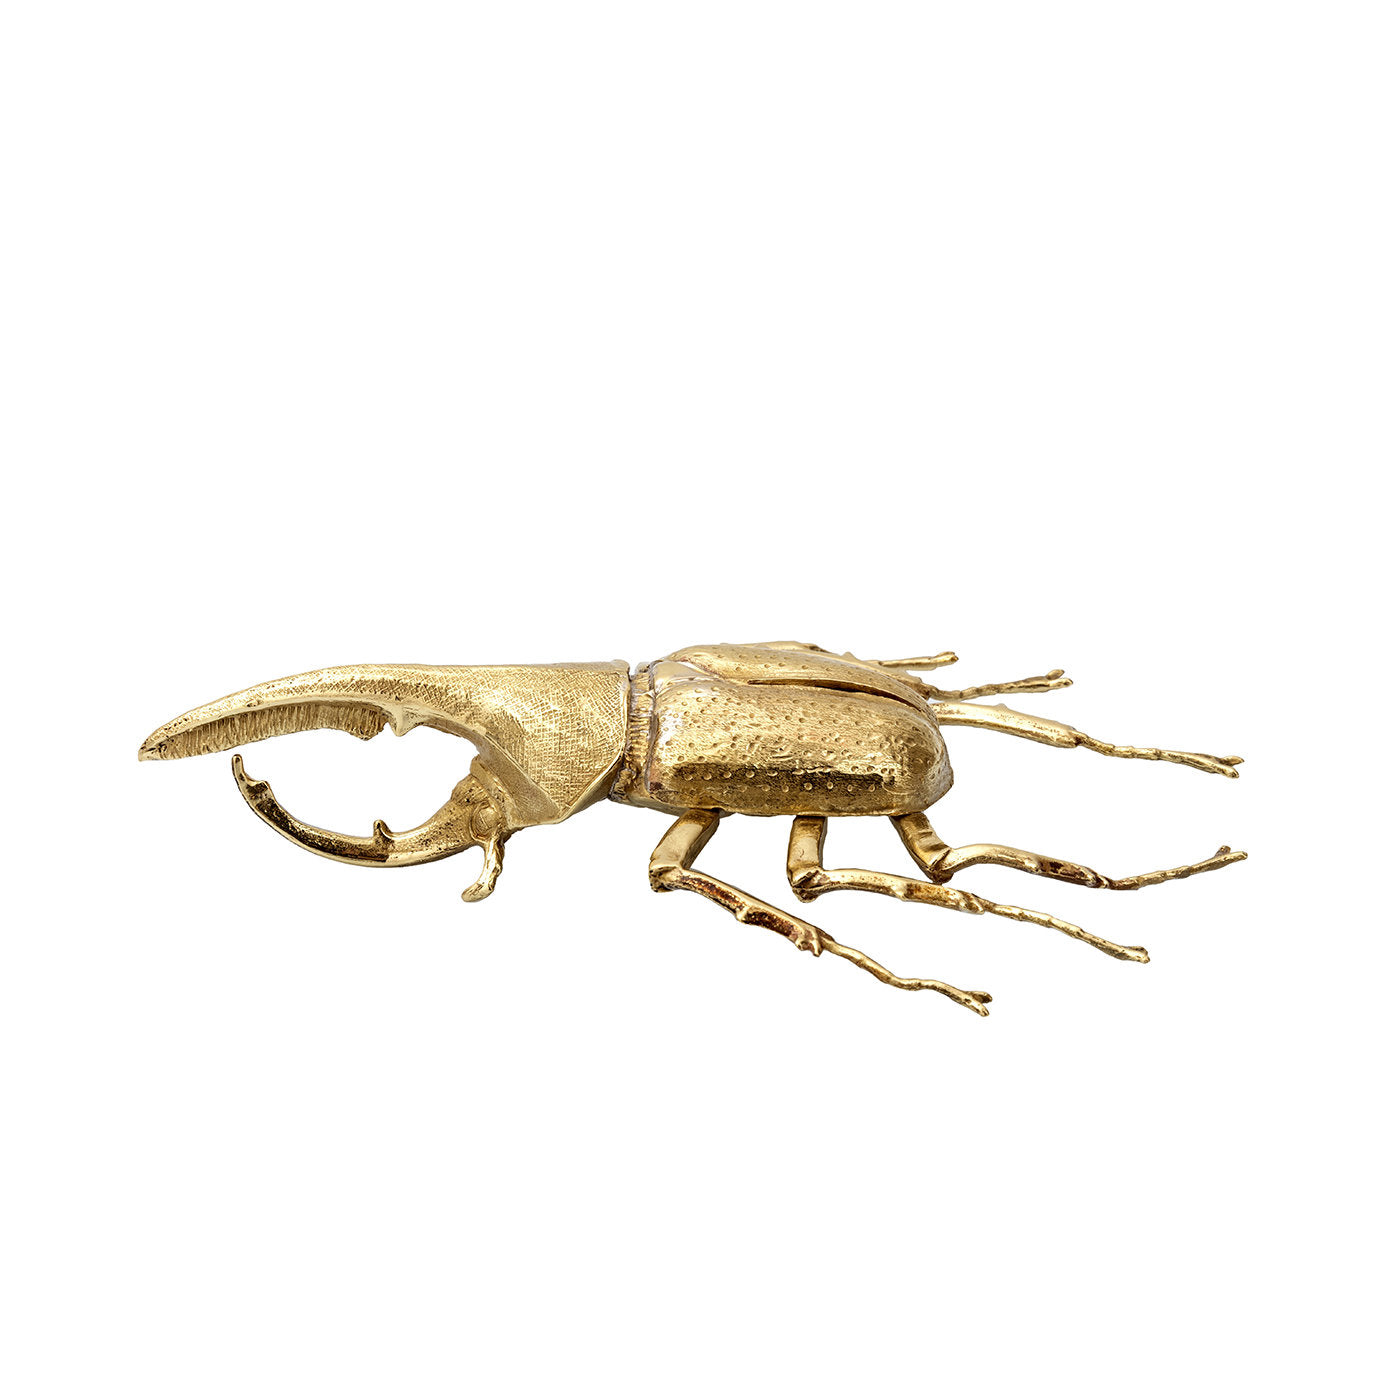 Bronze Rhinocerious Beetle Paperweight - Alternative view 1